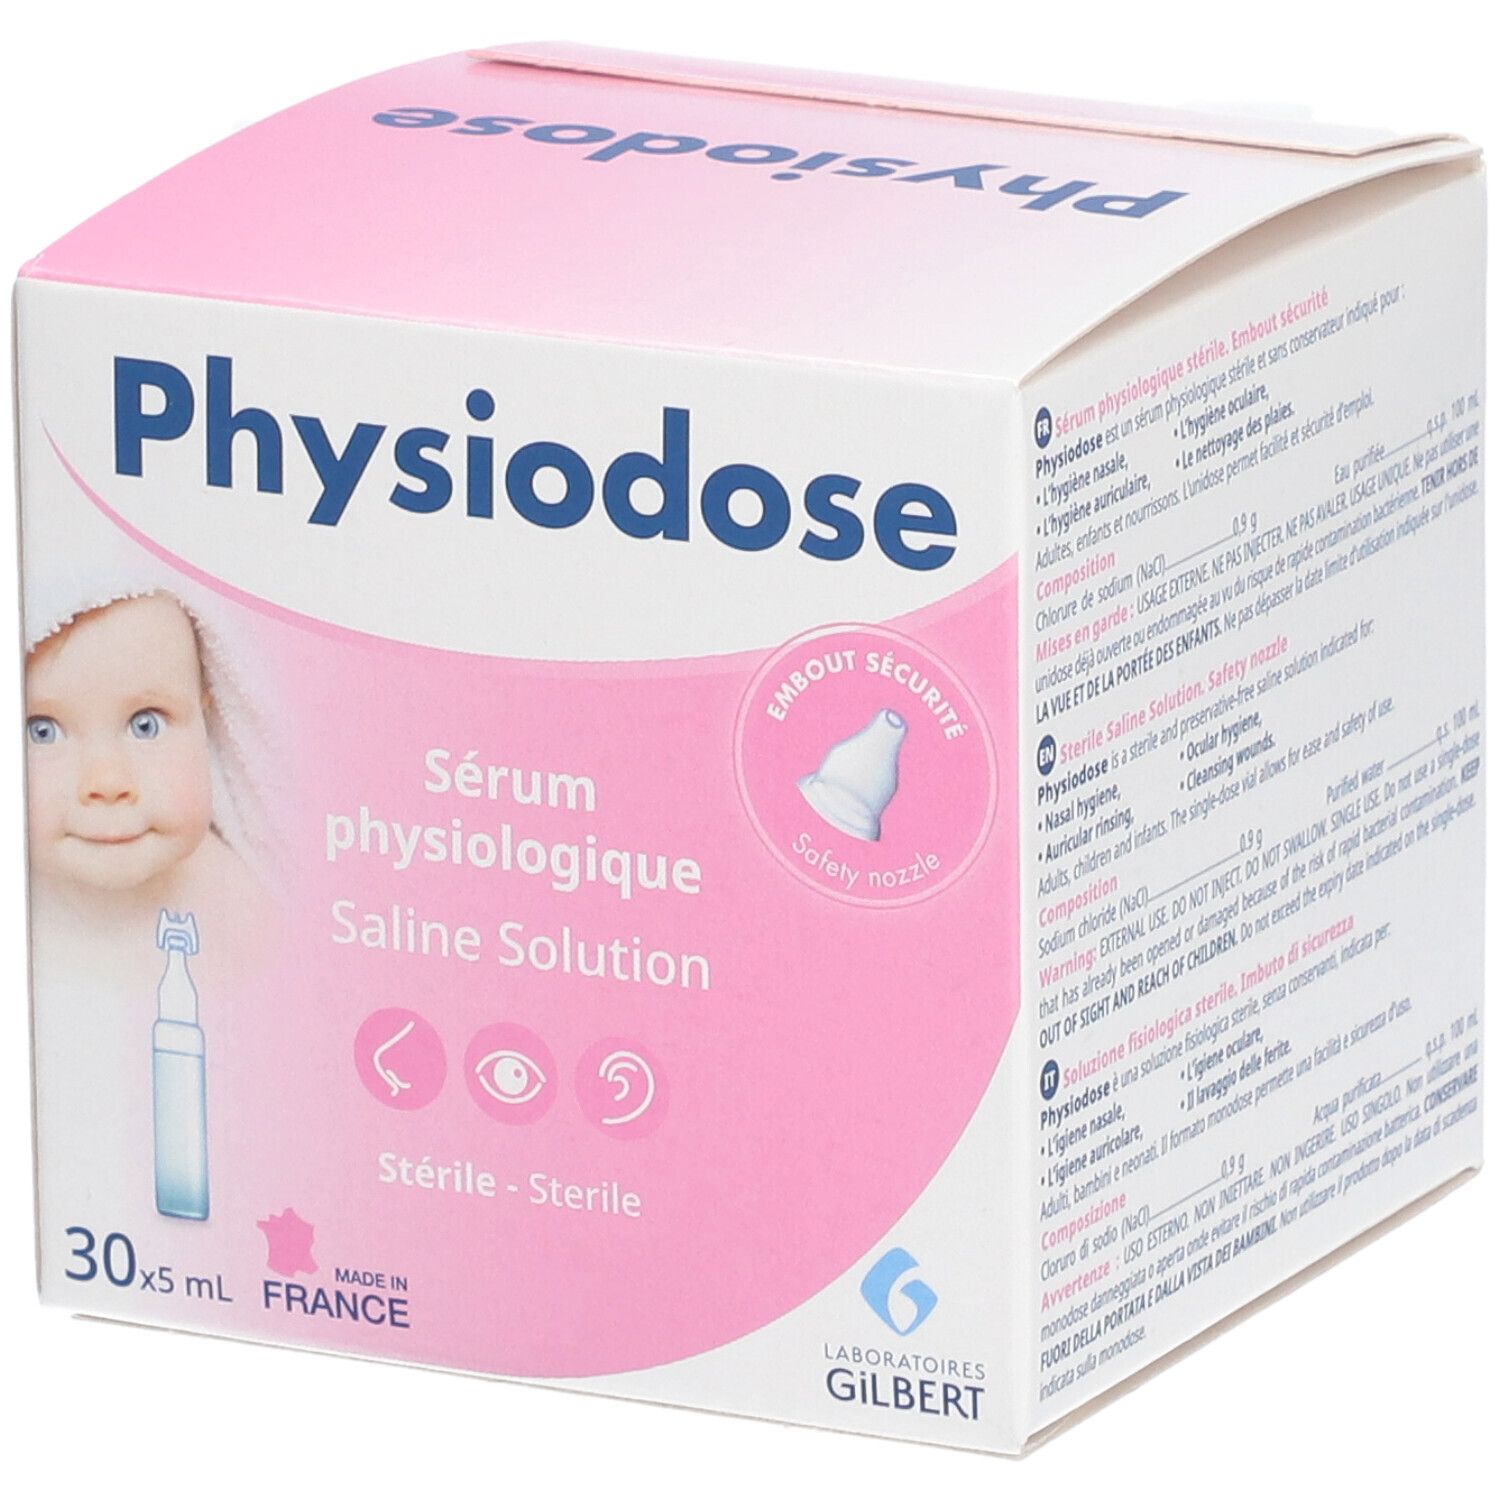 Physiodose Sérum physiologique Nez & Yeux - shop-pharmacie.fr